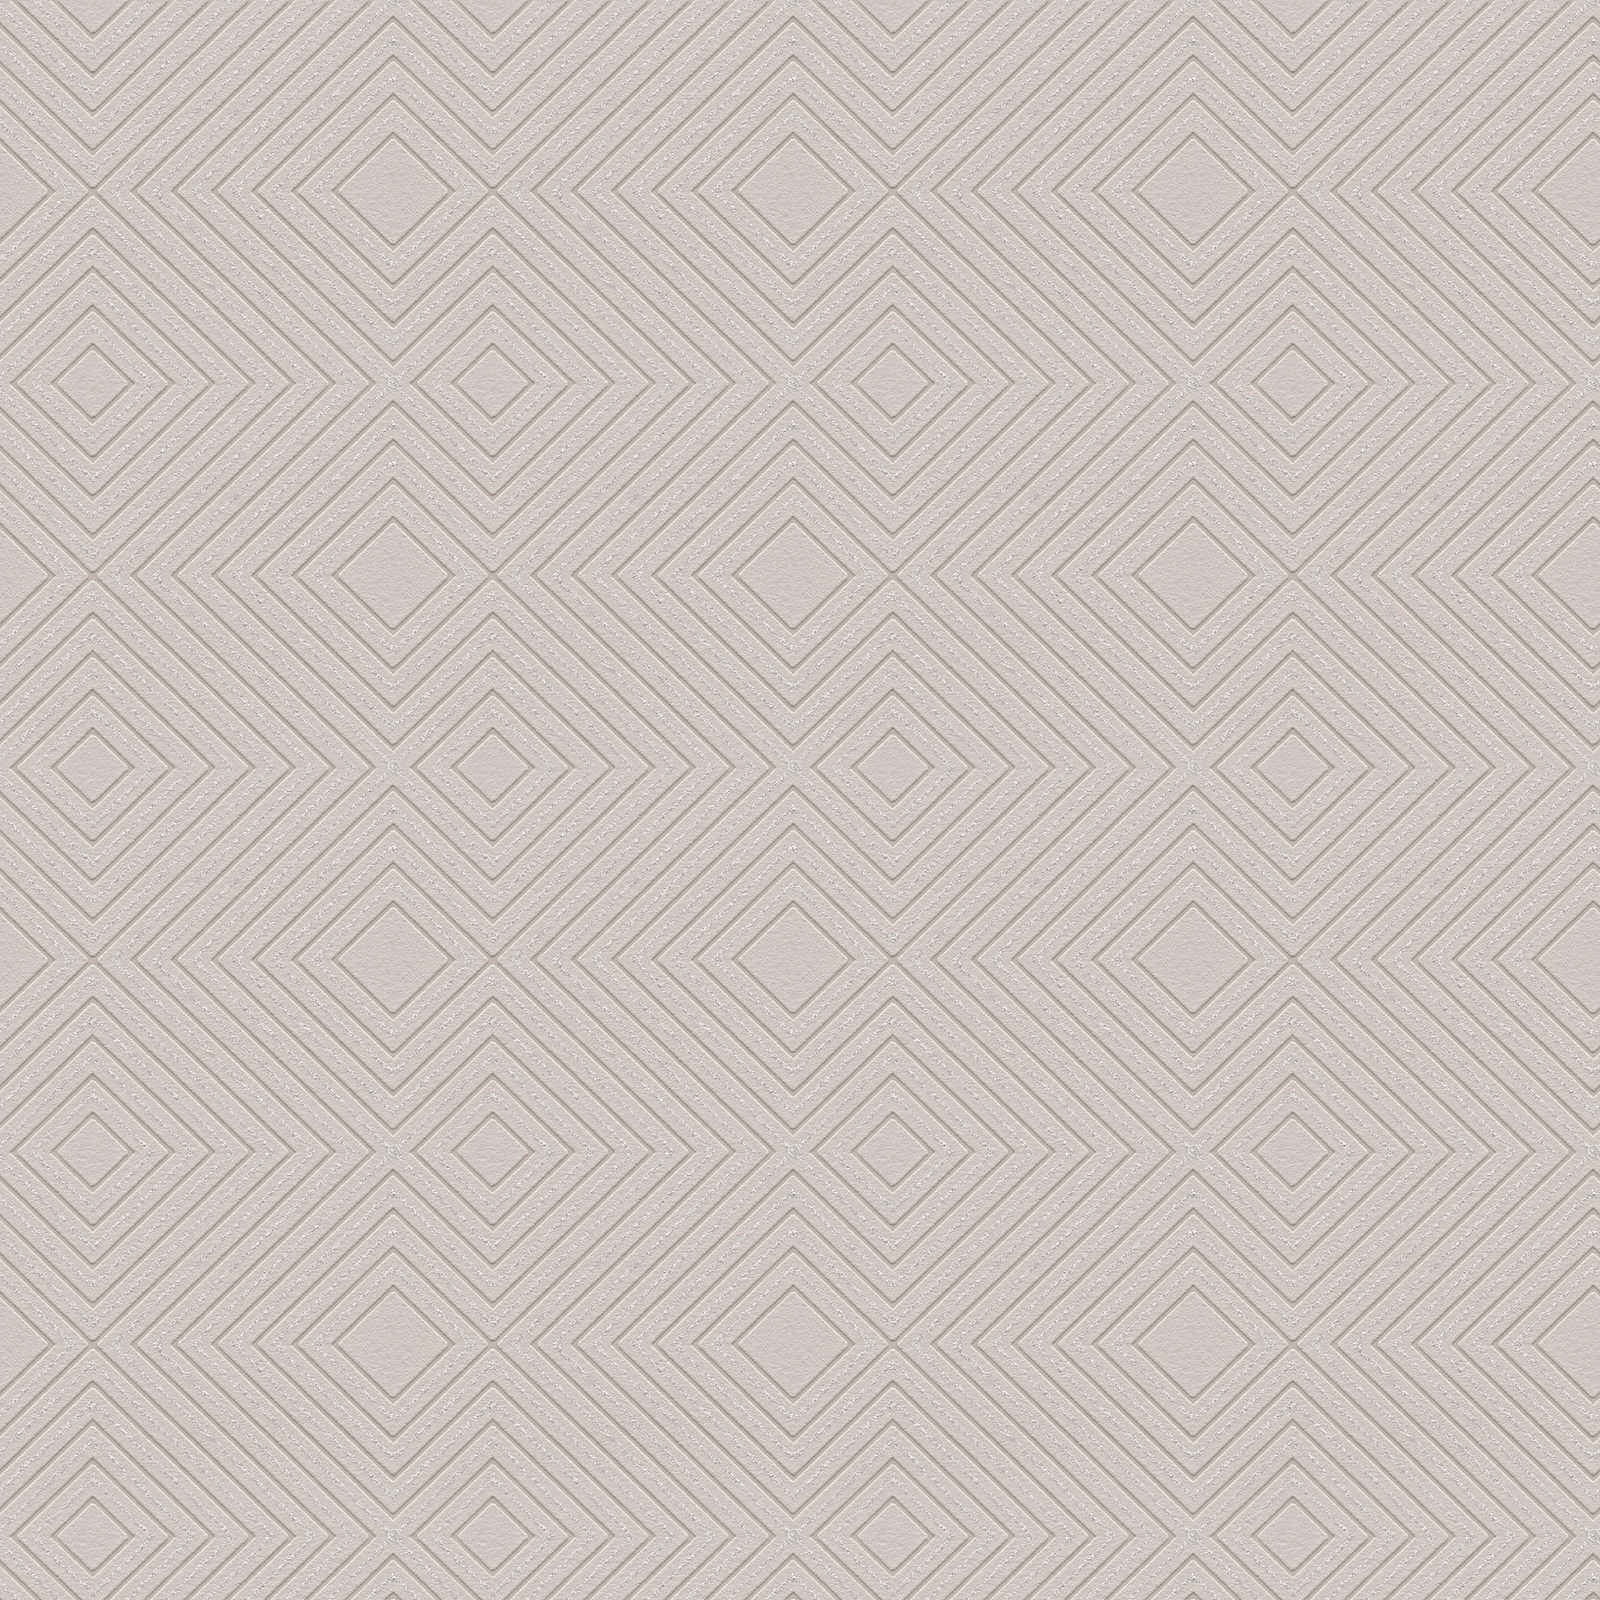 Plain wallpaper geometric pattern & metallic effect - brown
